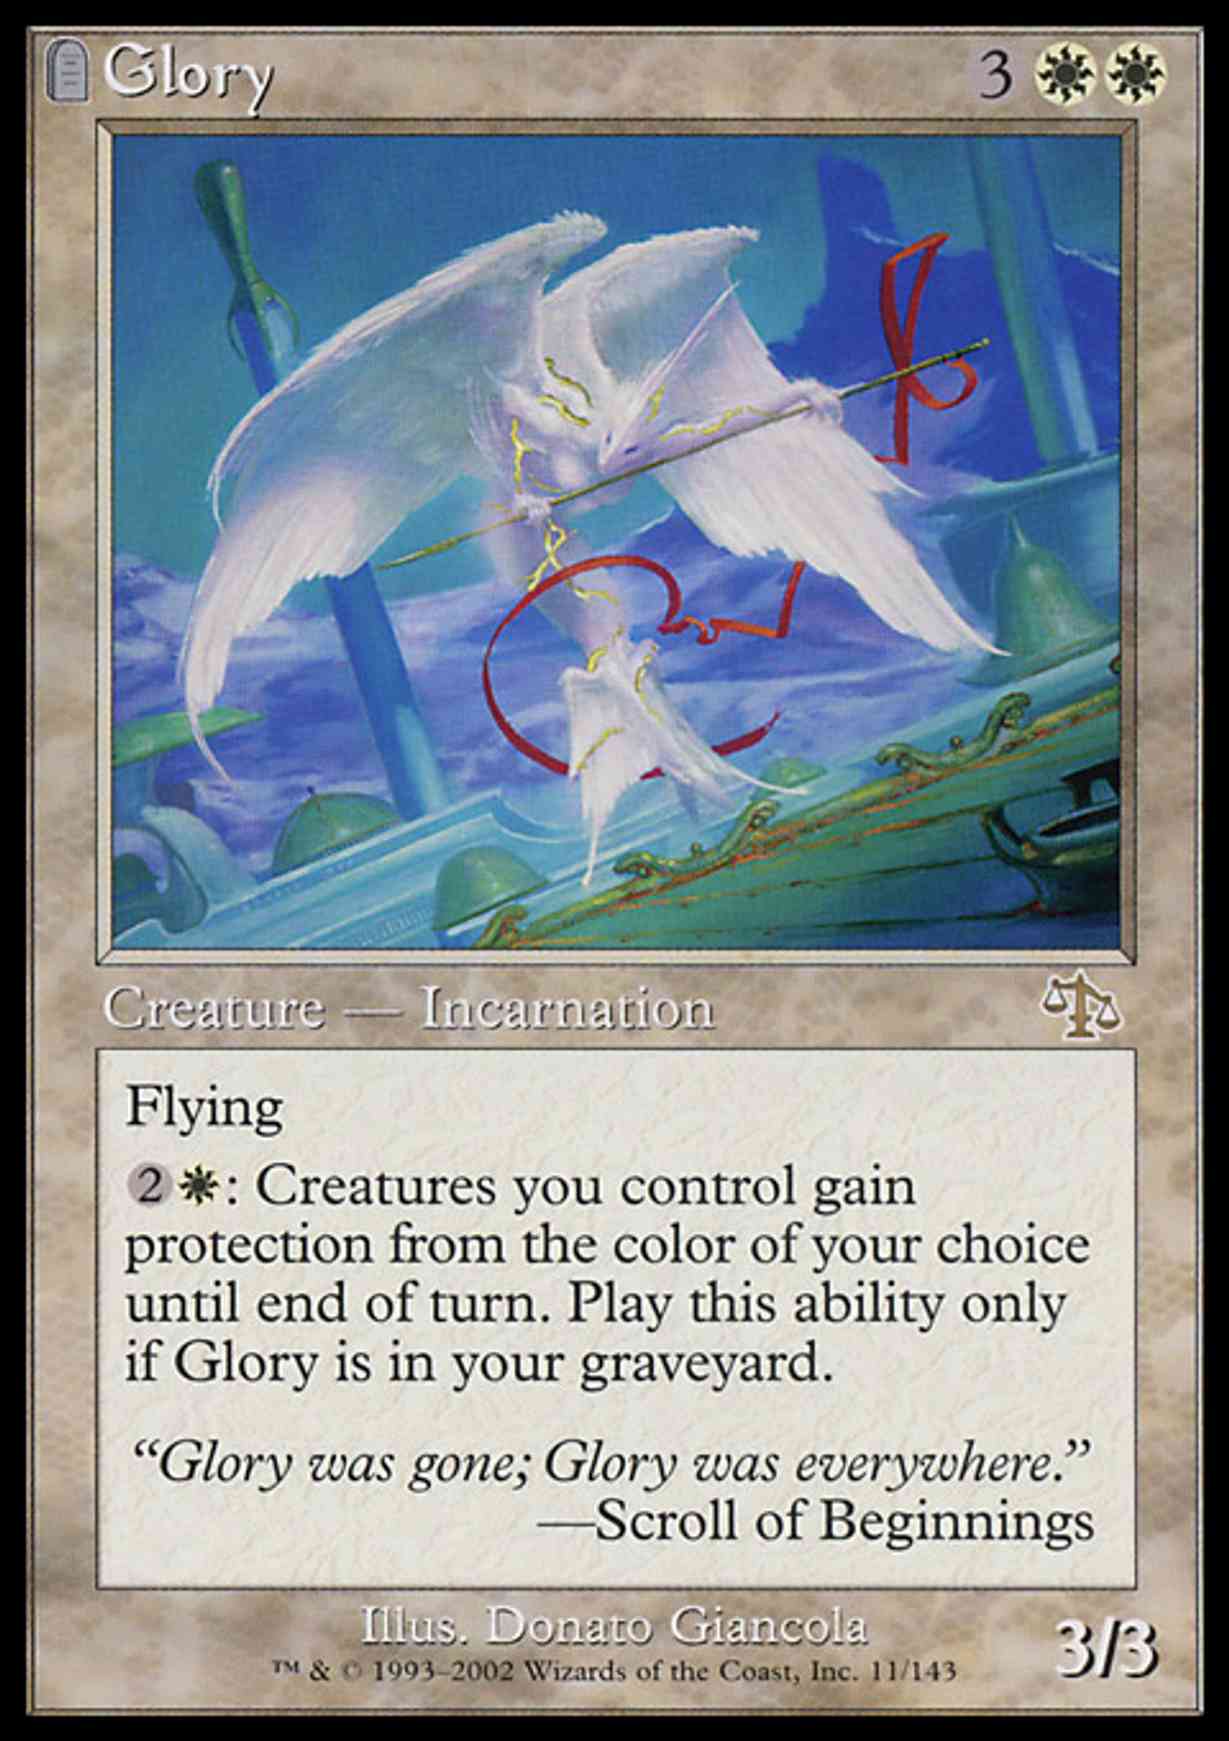 Glory magic card front